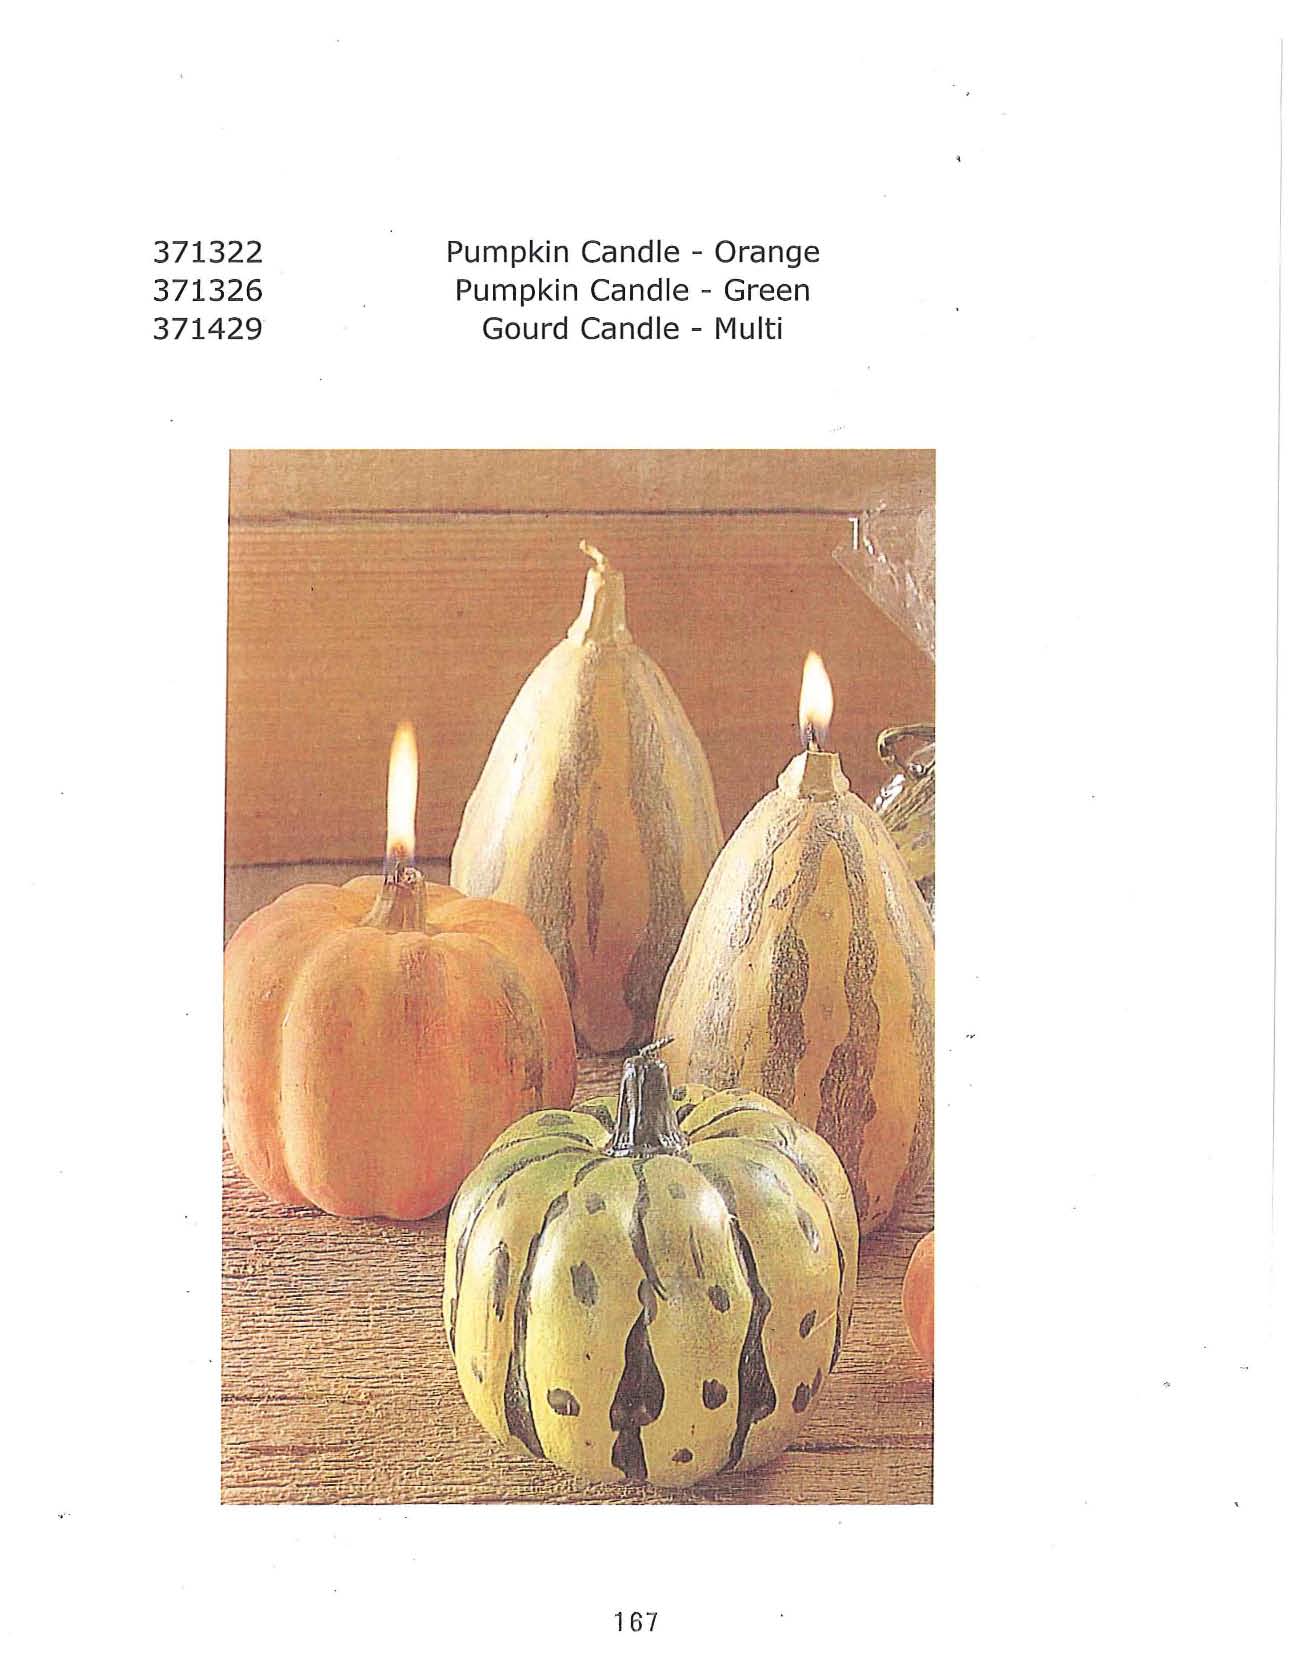 Pumpkin Candle Orange, Pumpkin Candle Green, Gourd Candle - Multi